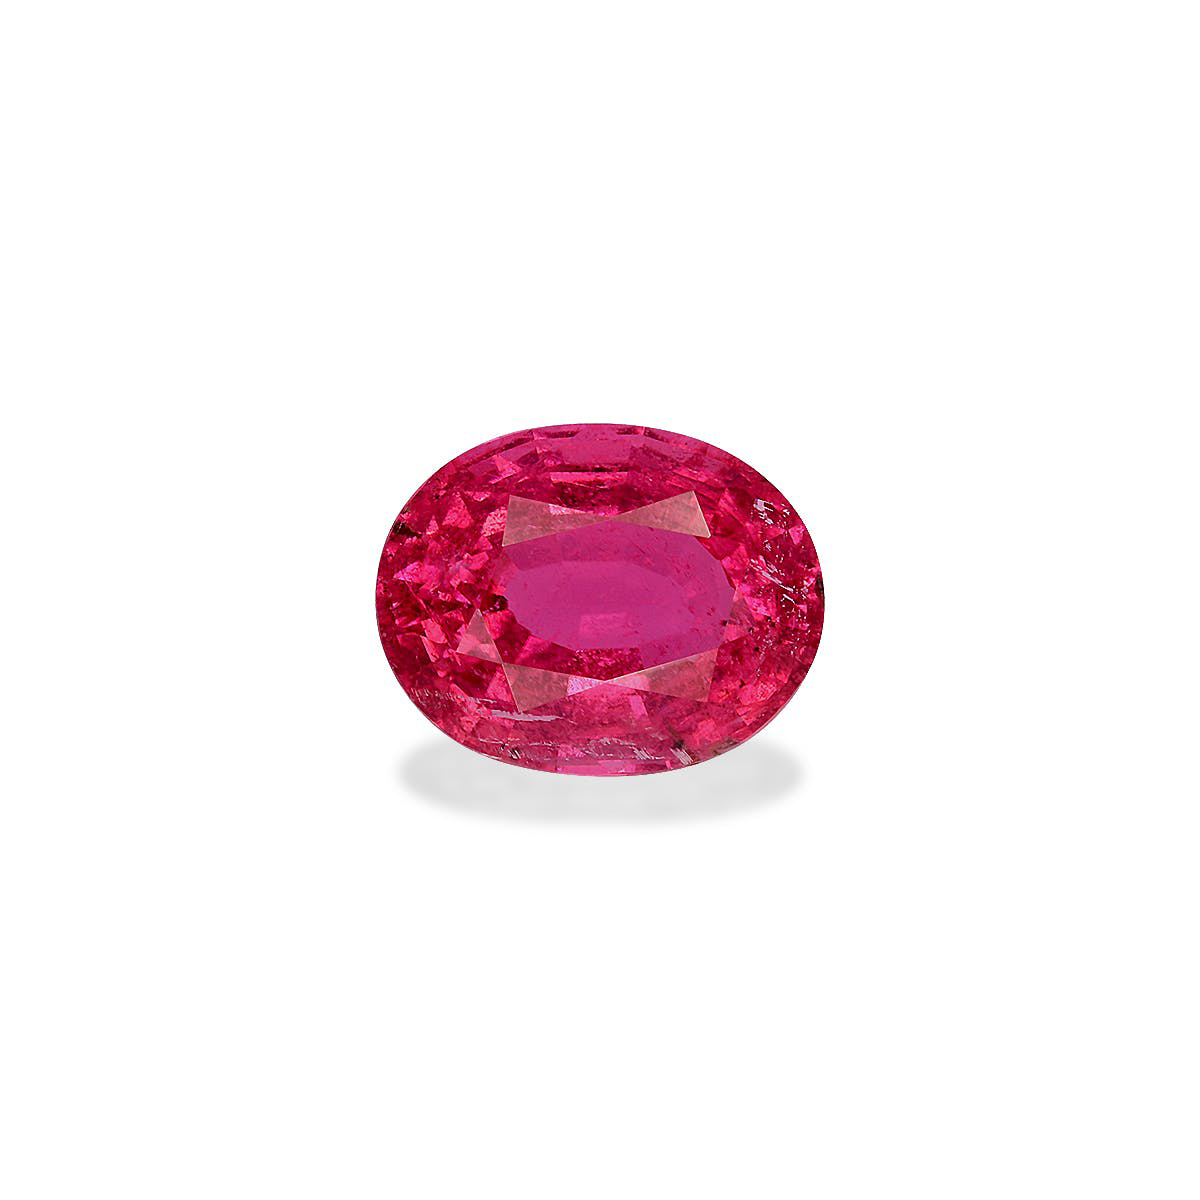 Picture of Vivid Pink Rubellite Tourmaline 2.13ct - 9x7mm (RL1256)